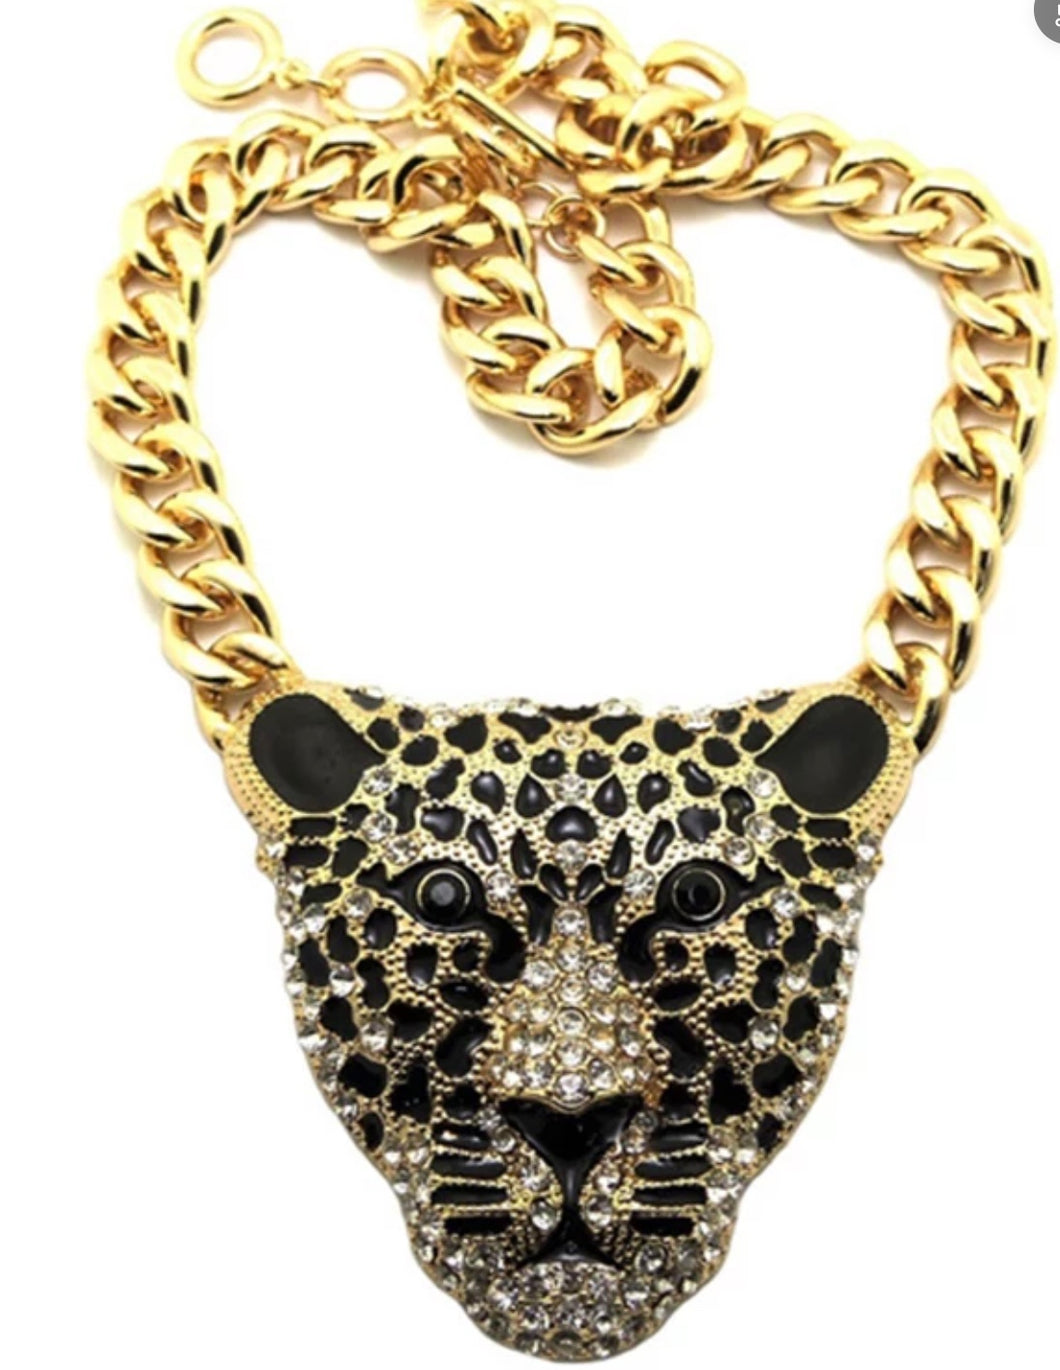 Samba Cheetah Statement Necklace SOLD OUT